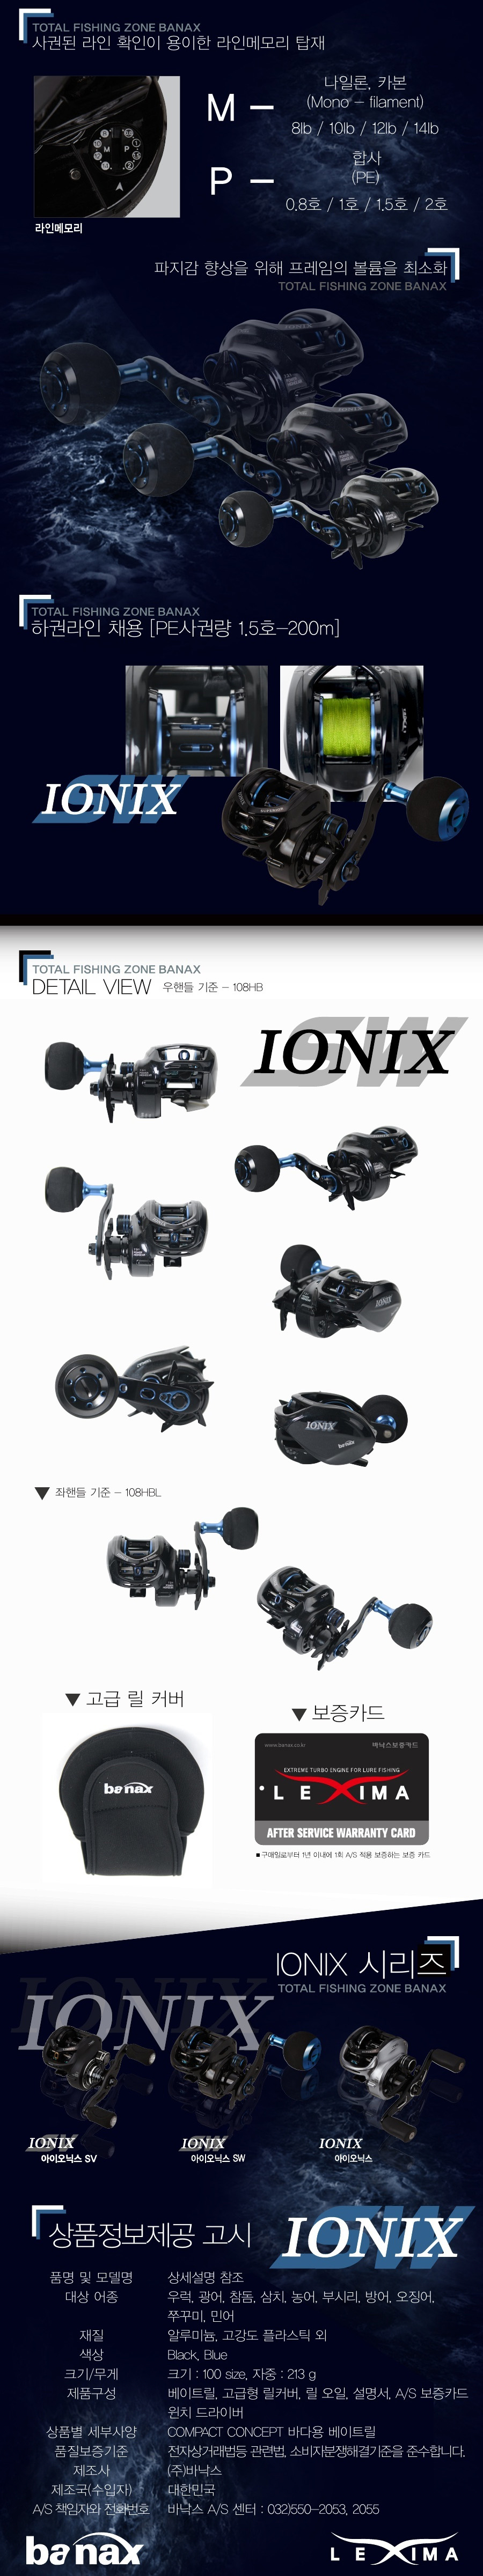 20171027-IONIX-SW2900.jpg